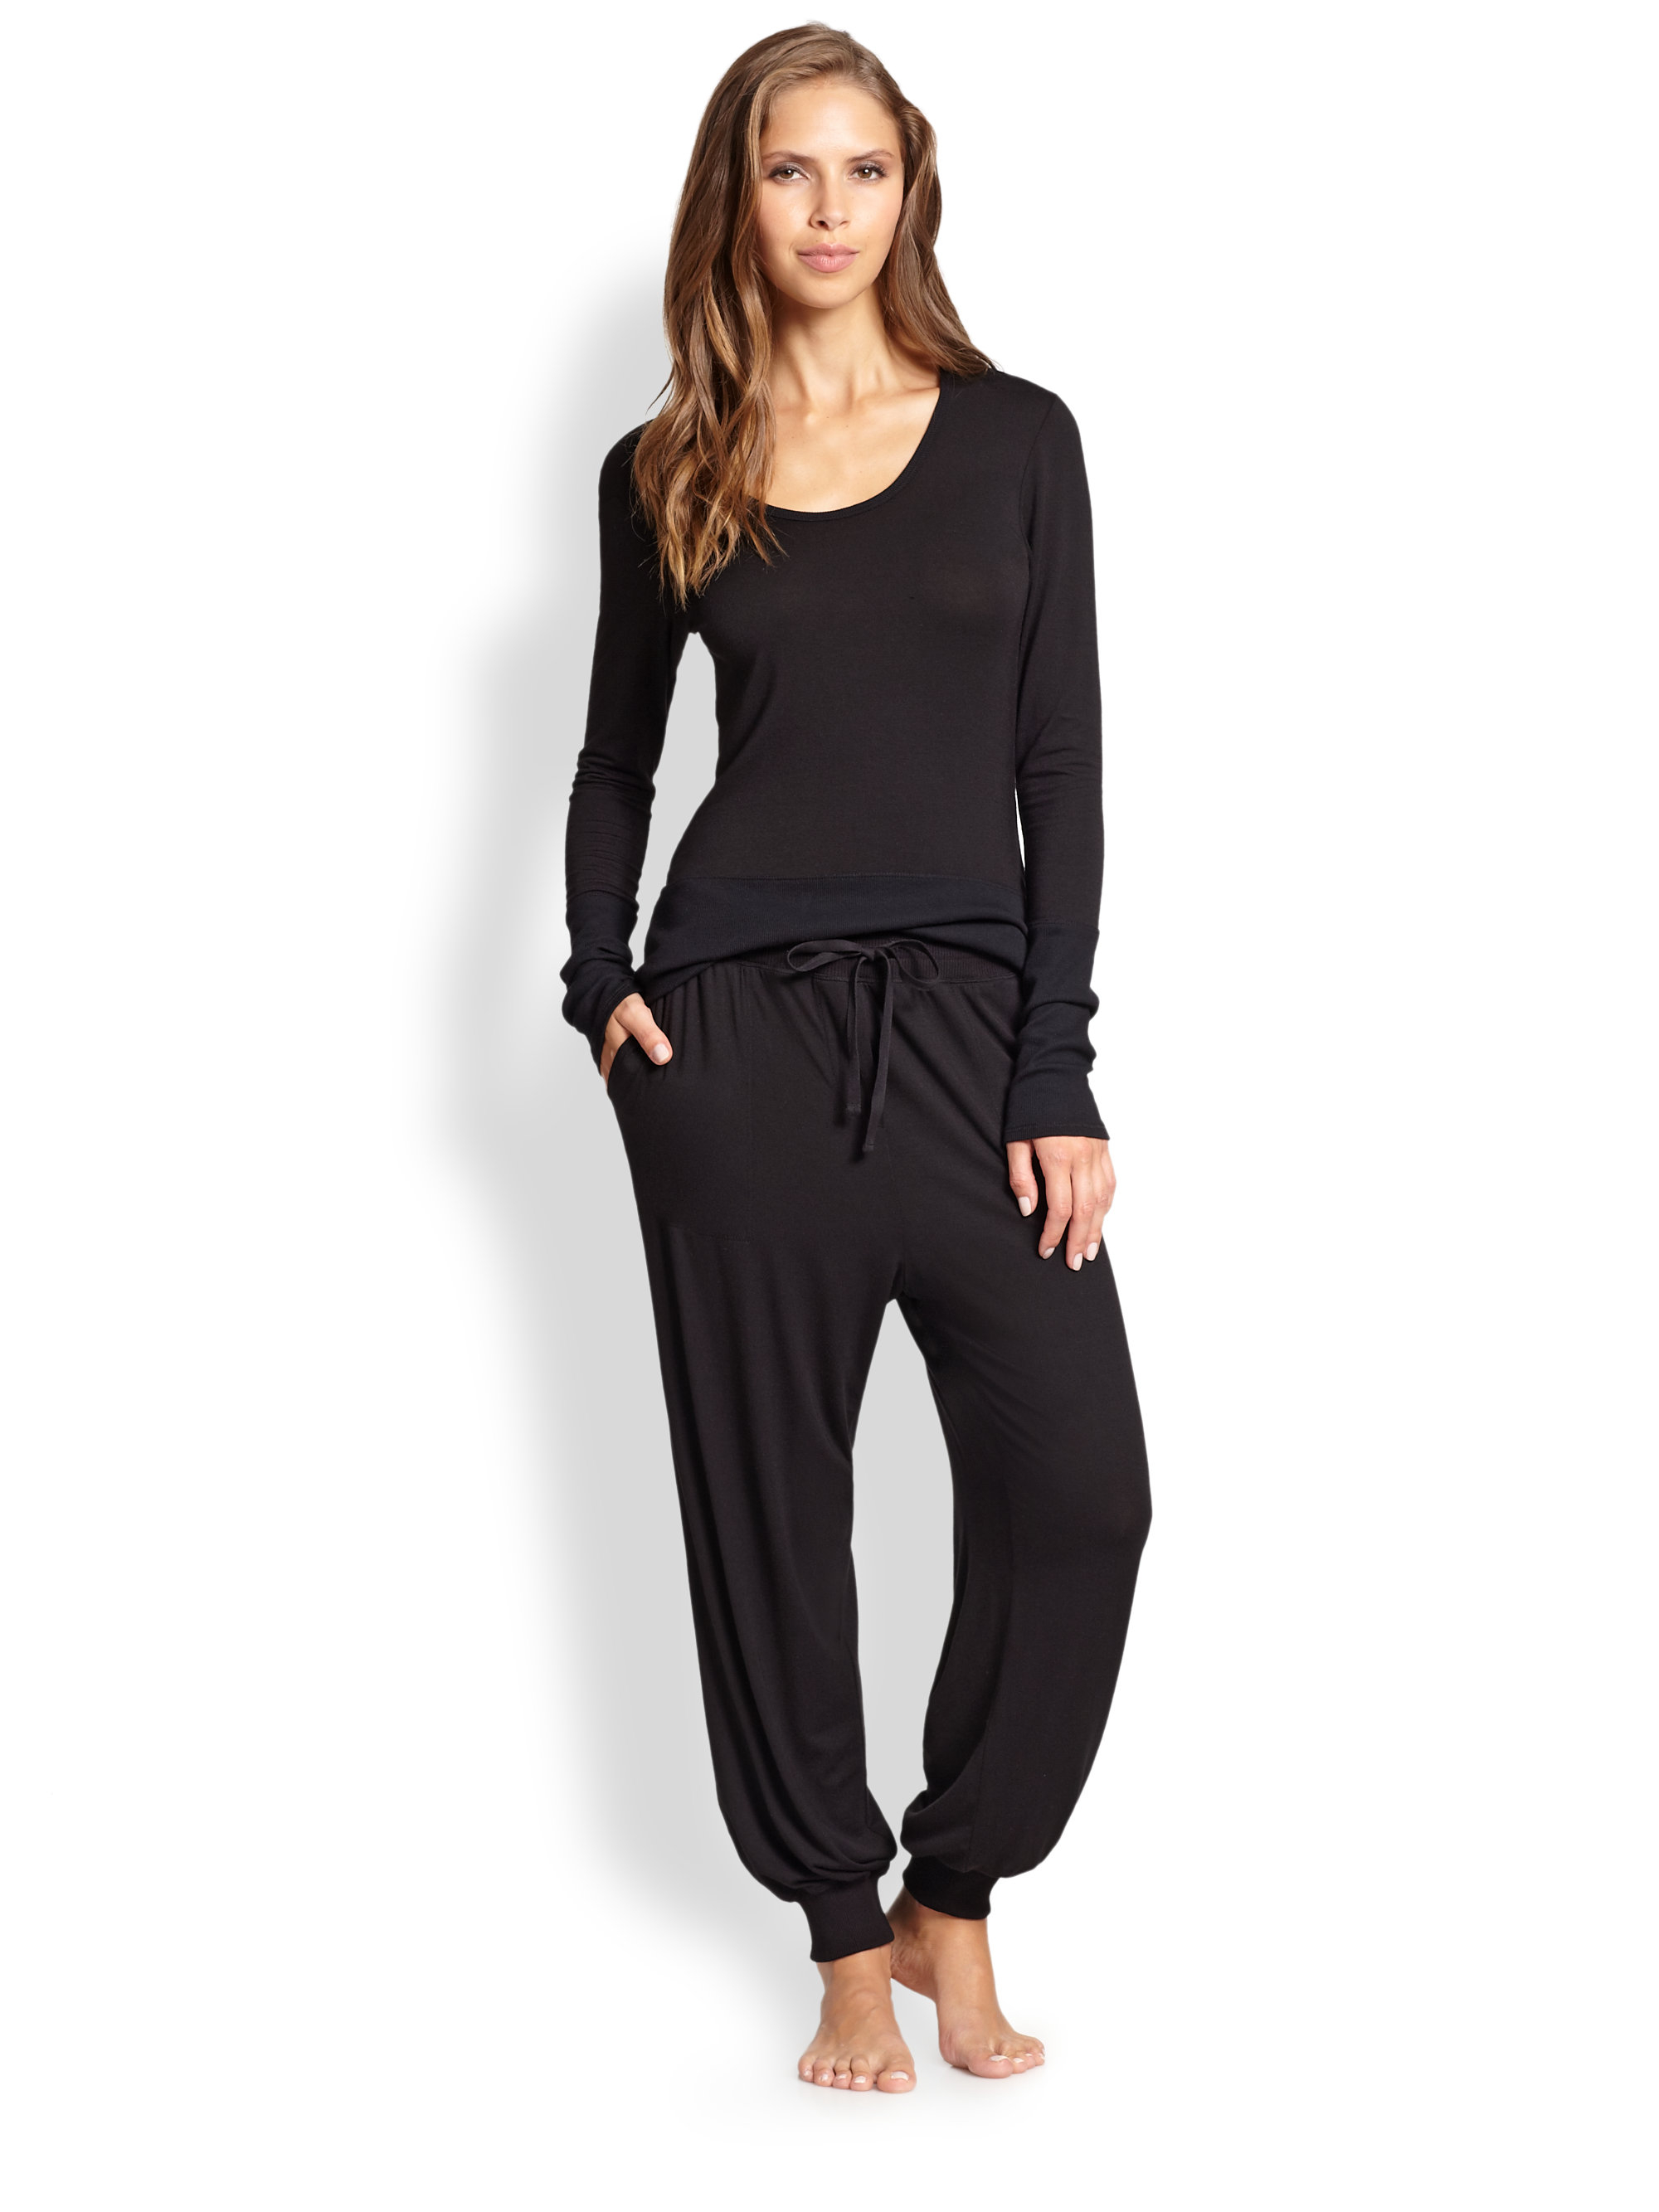 Lyst - Josie Stretch Jersey Pajama Pants in Black